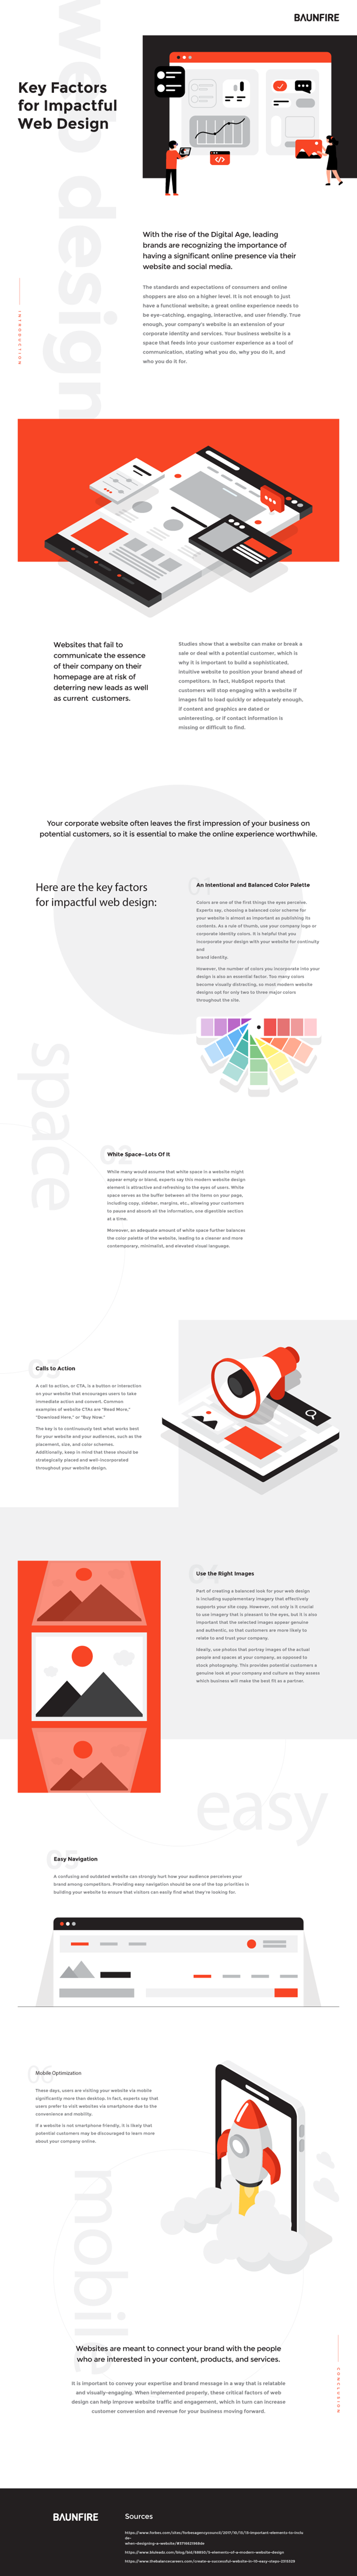 key-factors-for-impactful-web-design-01.png